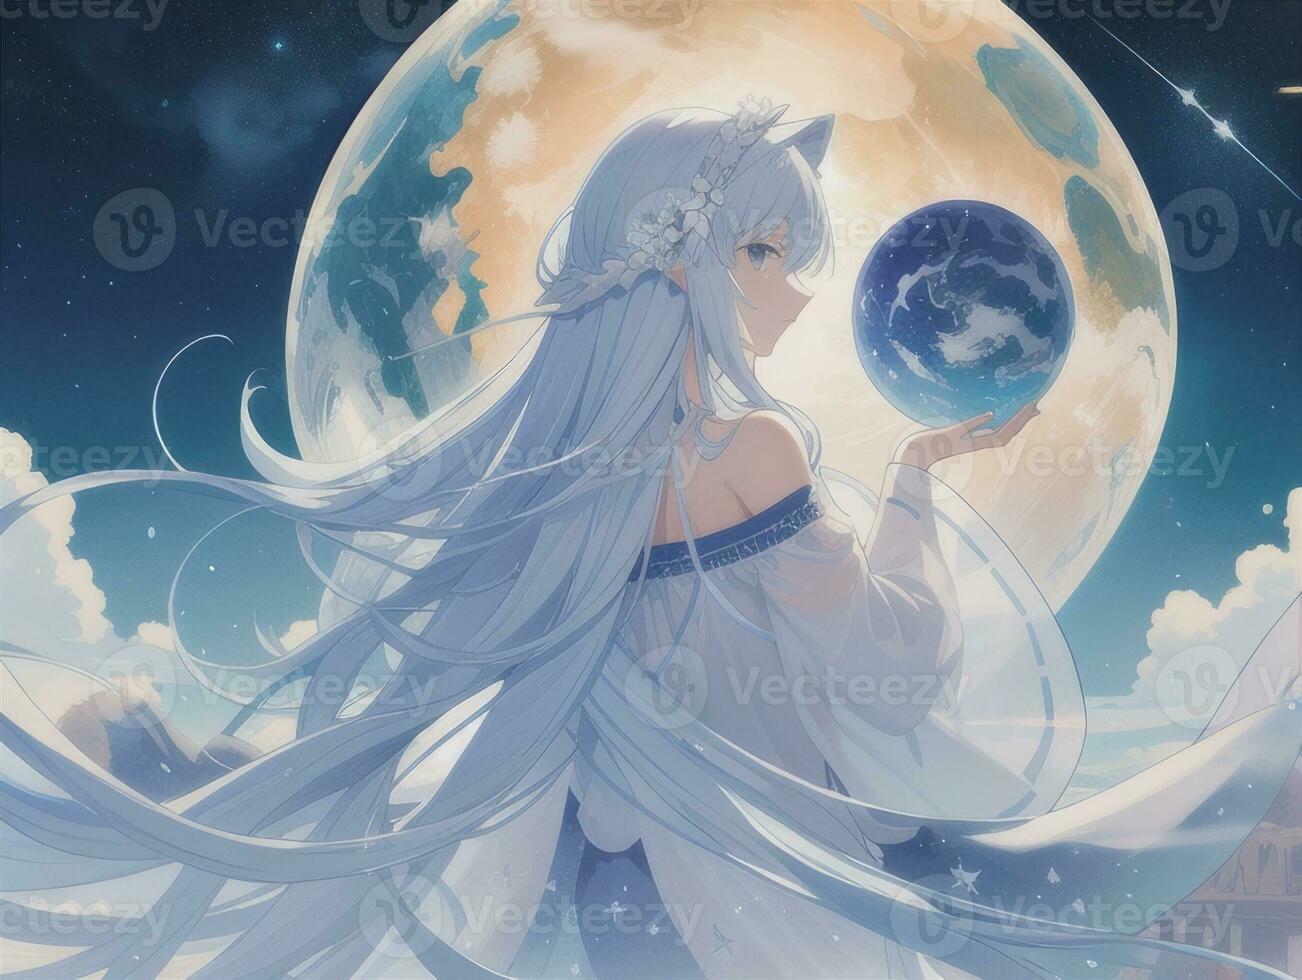 ai gegenereerd anime karakter met sterrenhemel lucht en hemel- ster zichtbaar roman achtergrond foto